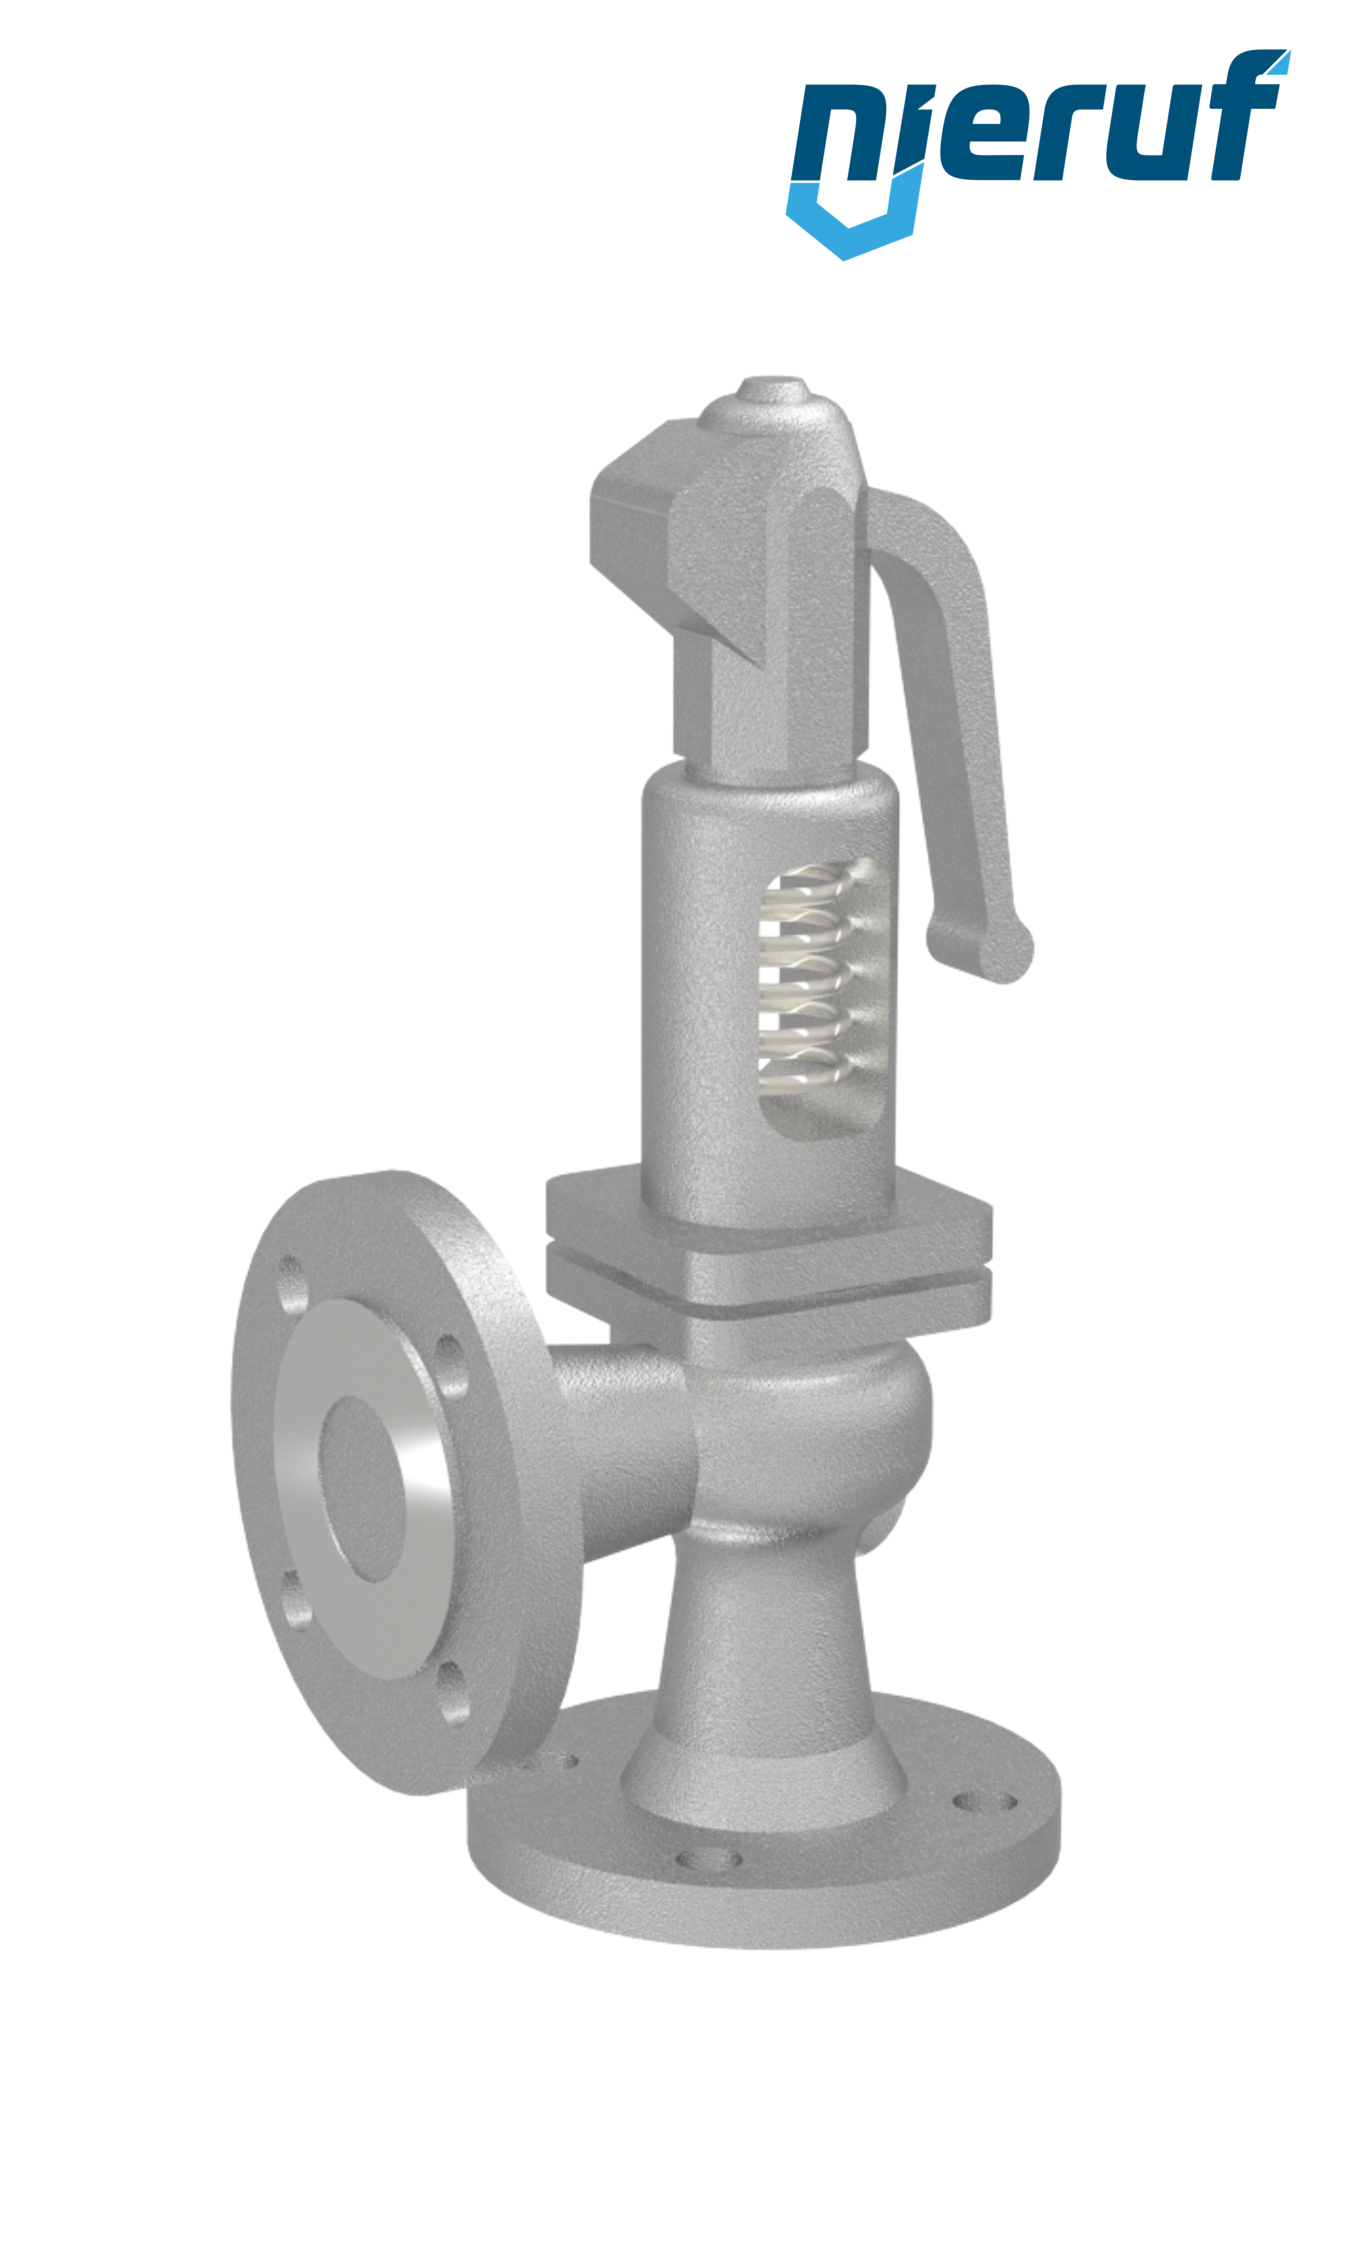 flange-safety valve DN15/DN15 SF0102, cast iron EN-JL1040 FPM, with lever